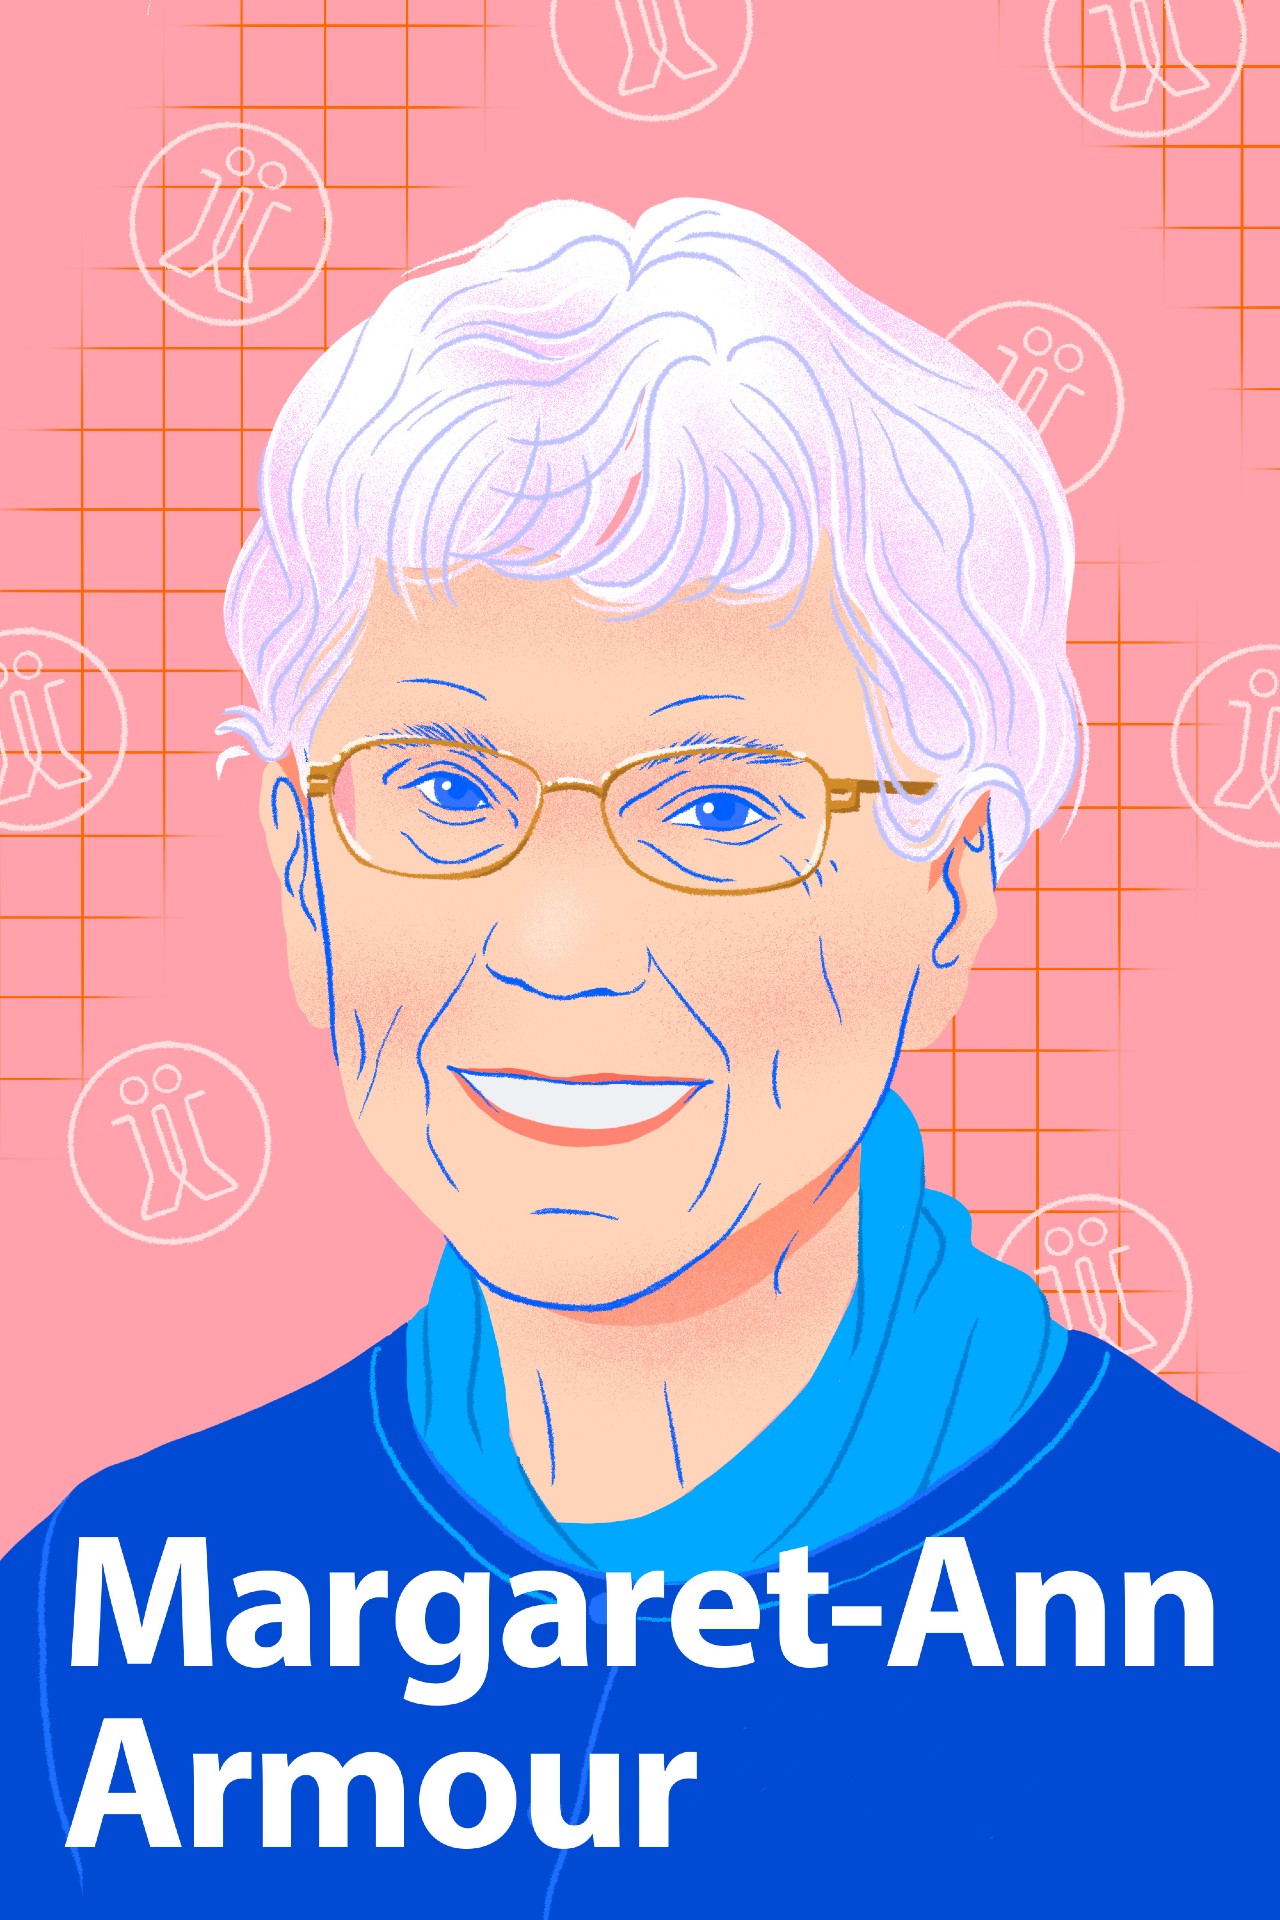 Dr. Margaret-Ann Armour